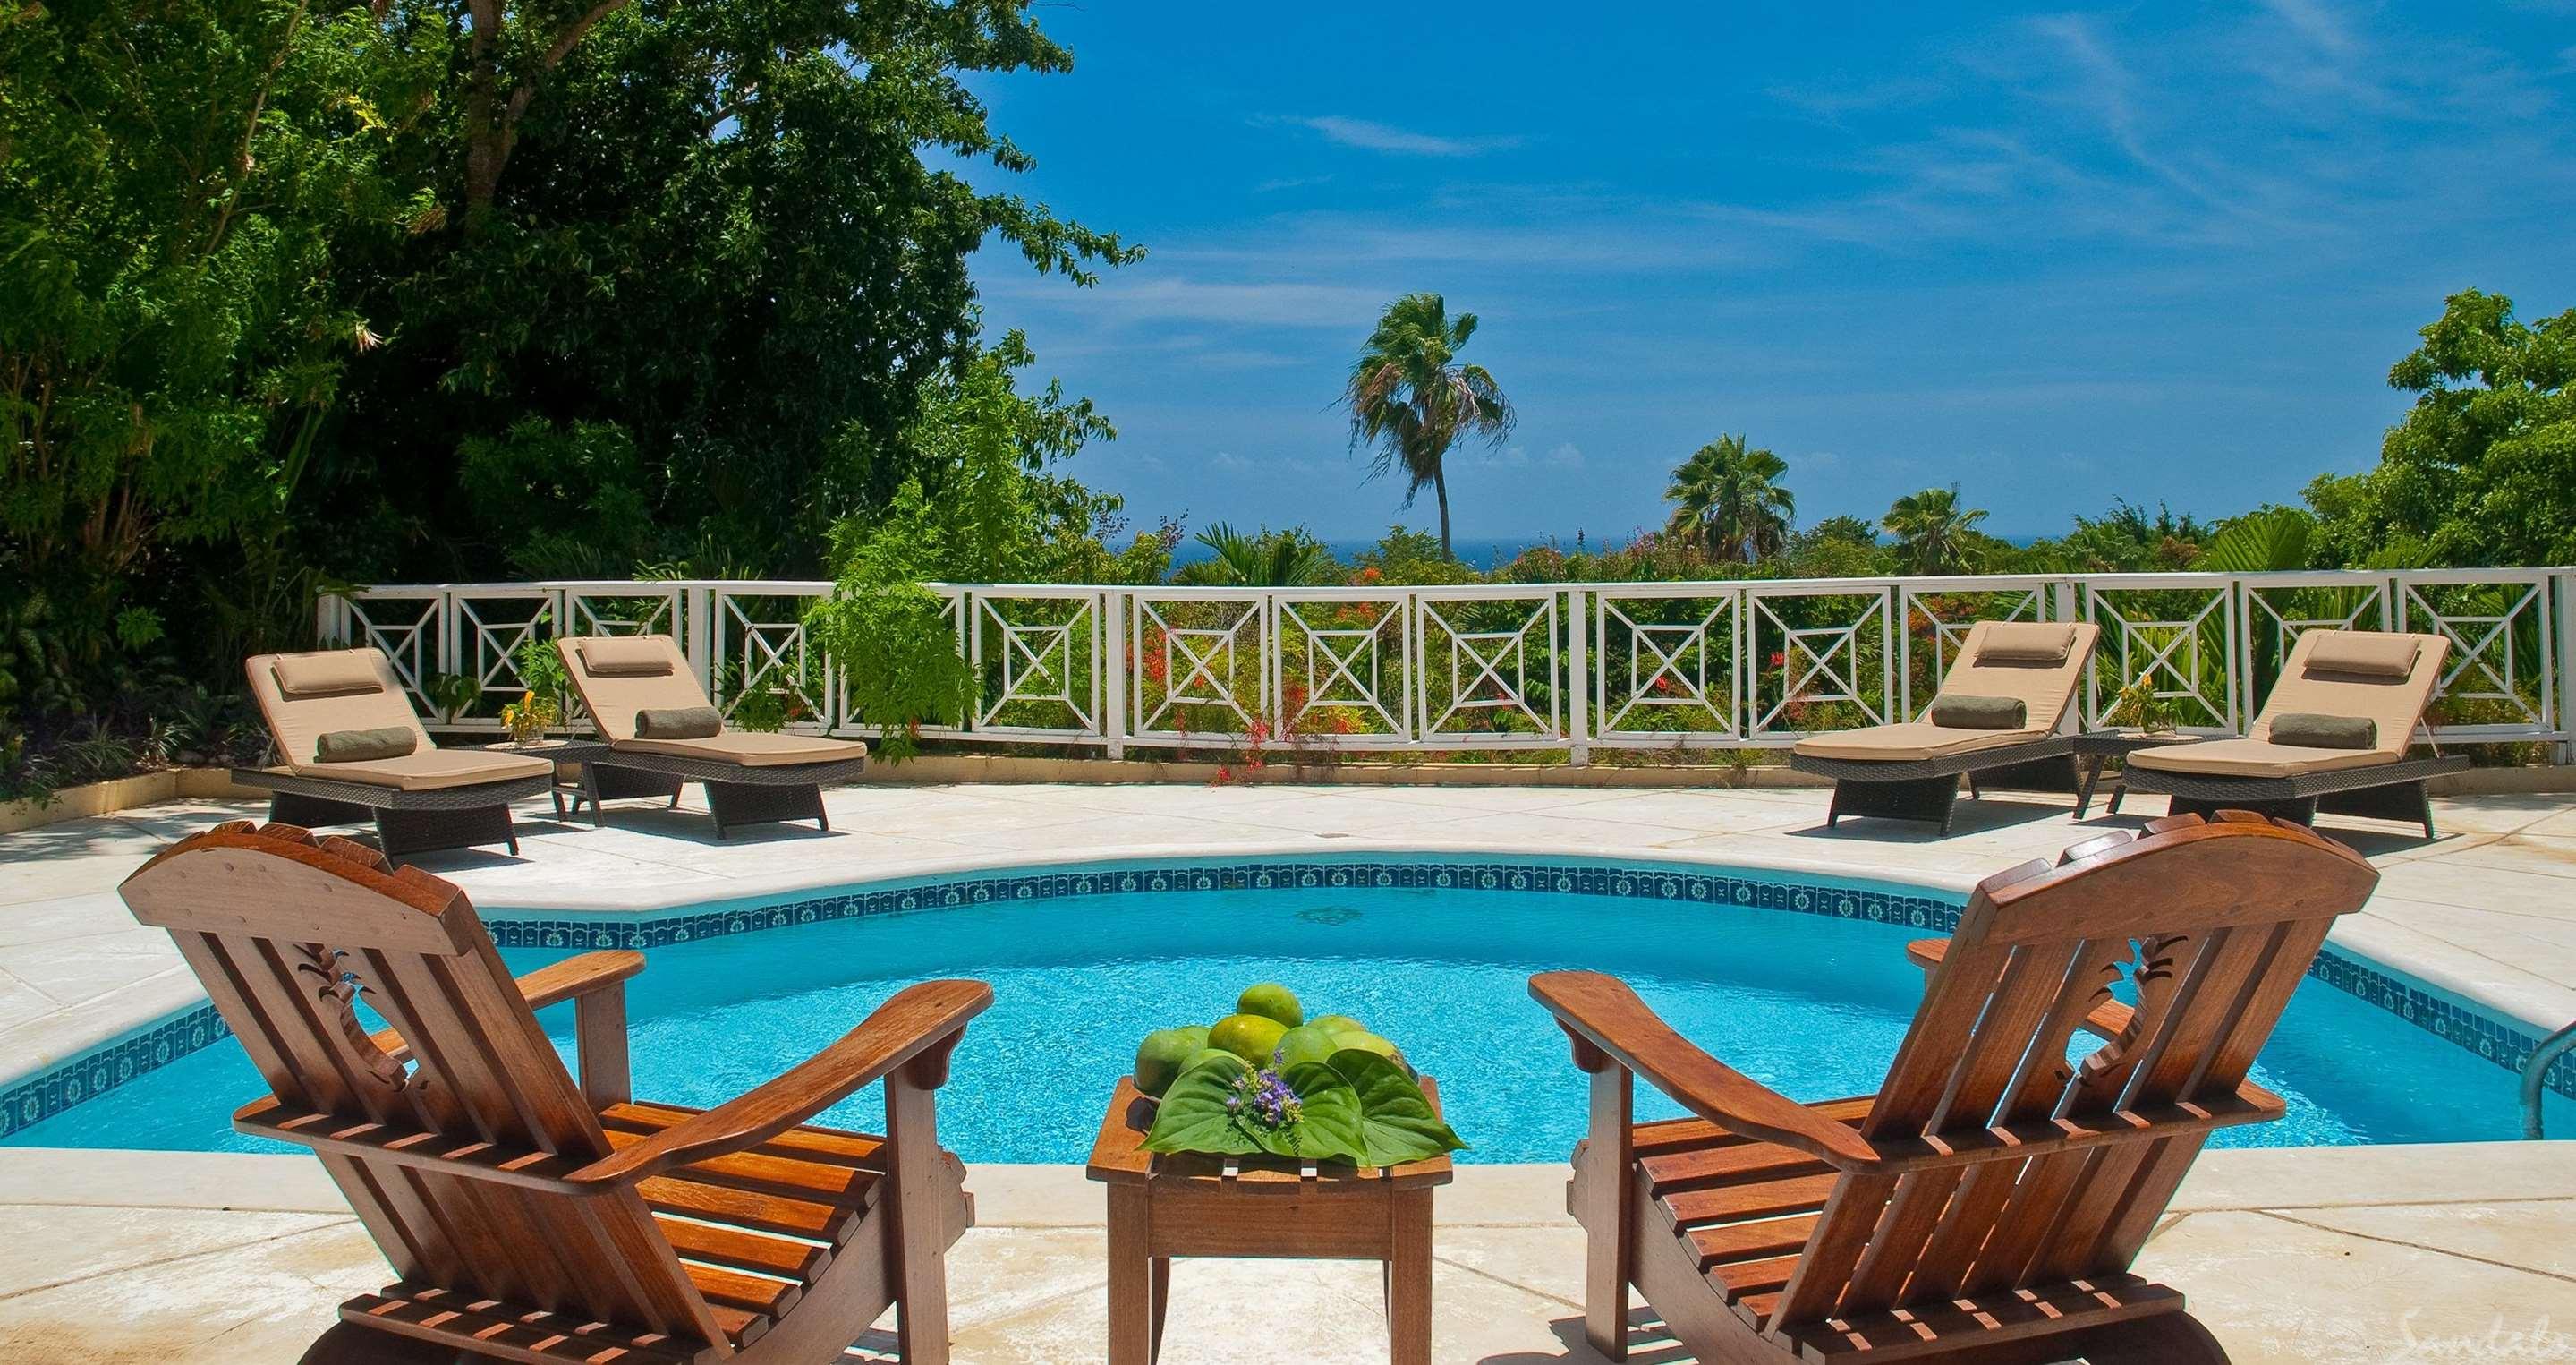 Sandals Ochi Luxury Resort in Ocho Rios, Jamaica | Sandals